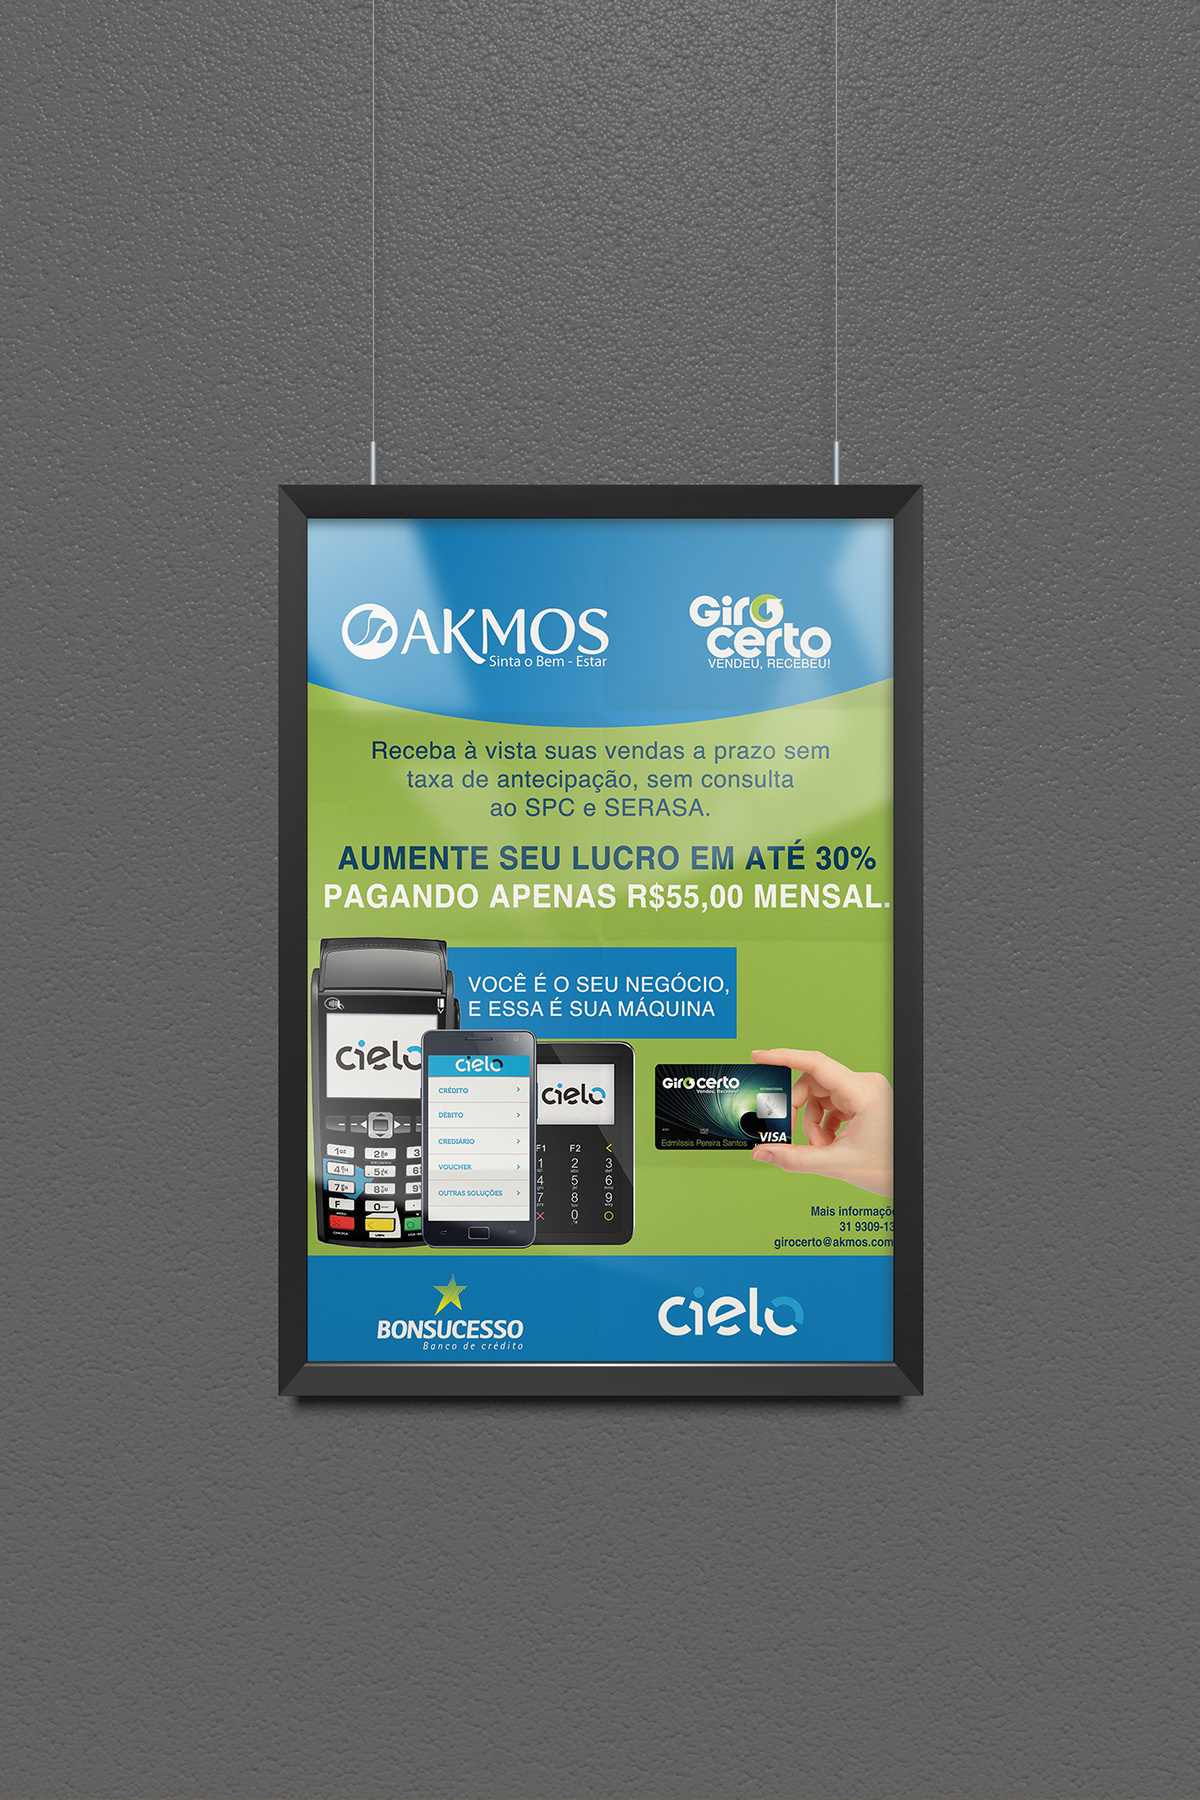 design job marketing   akmos graphic Giro Certo Bonsucesso folder banner impresso facebook